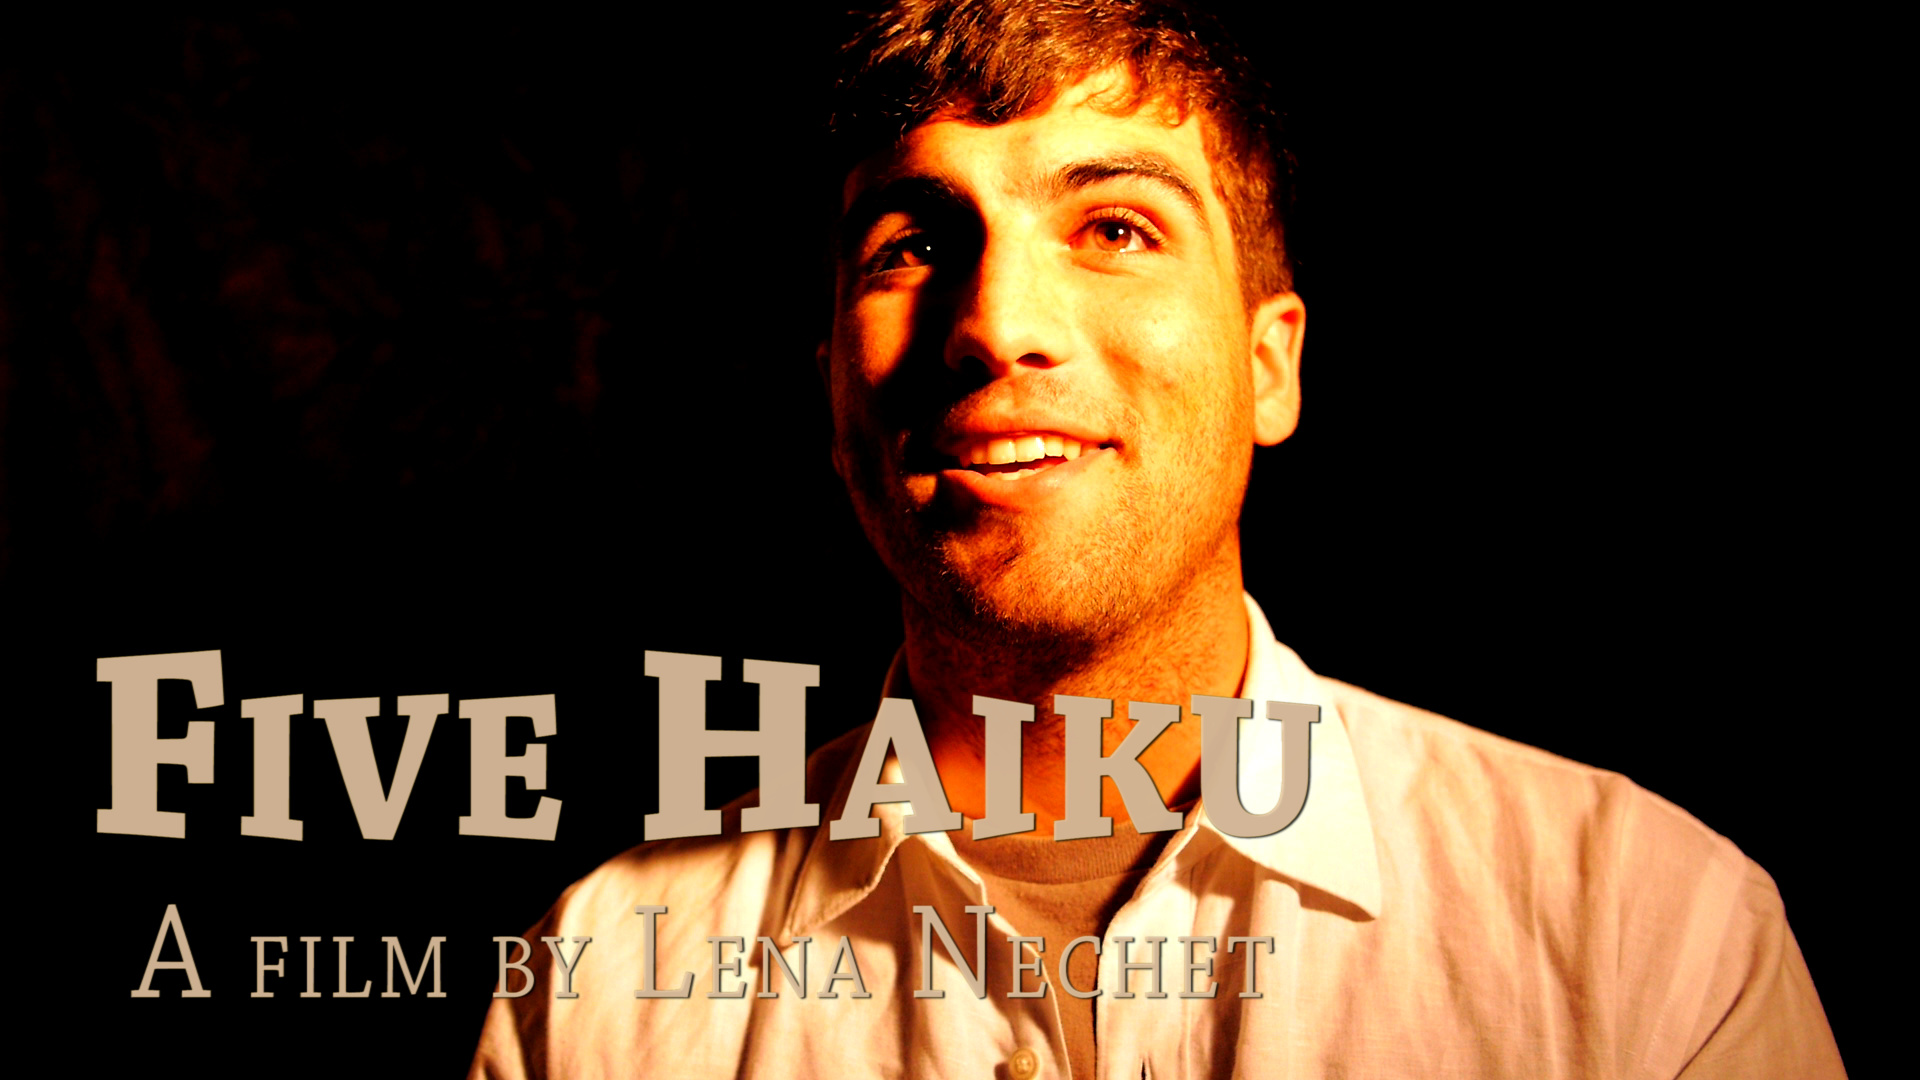 5 Haiku Short Documentary Film by Lena Nechet